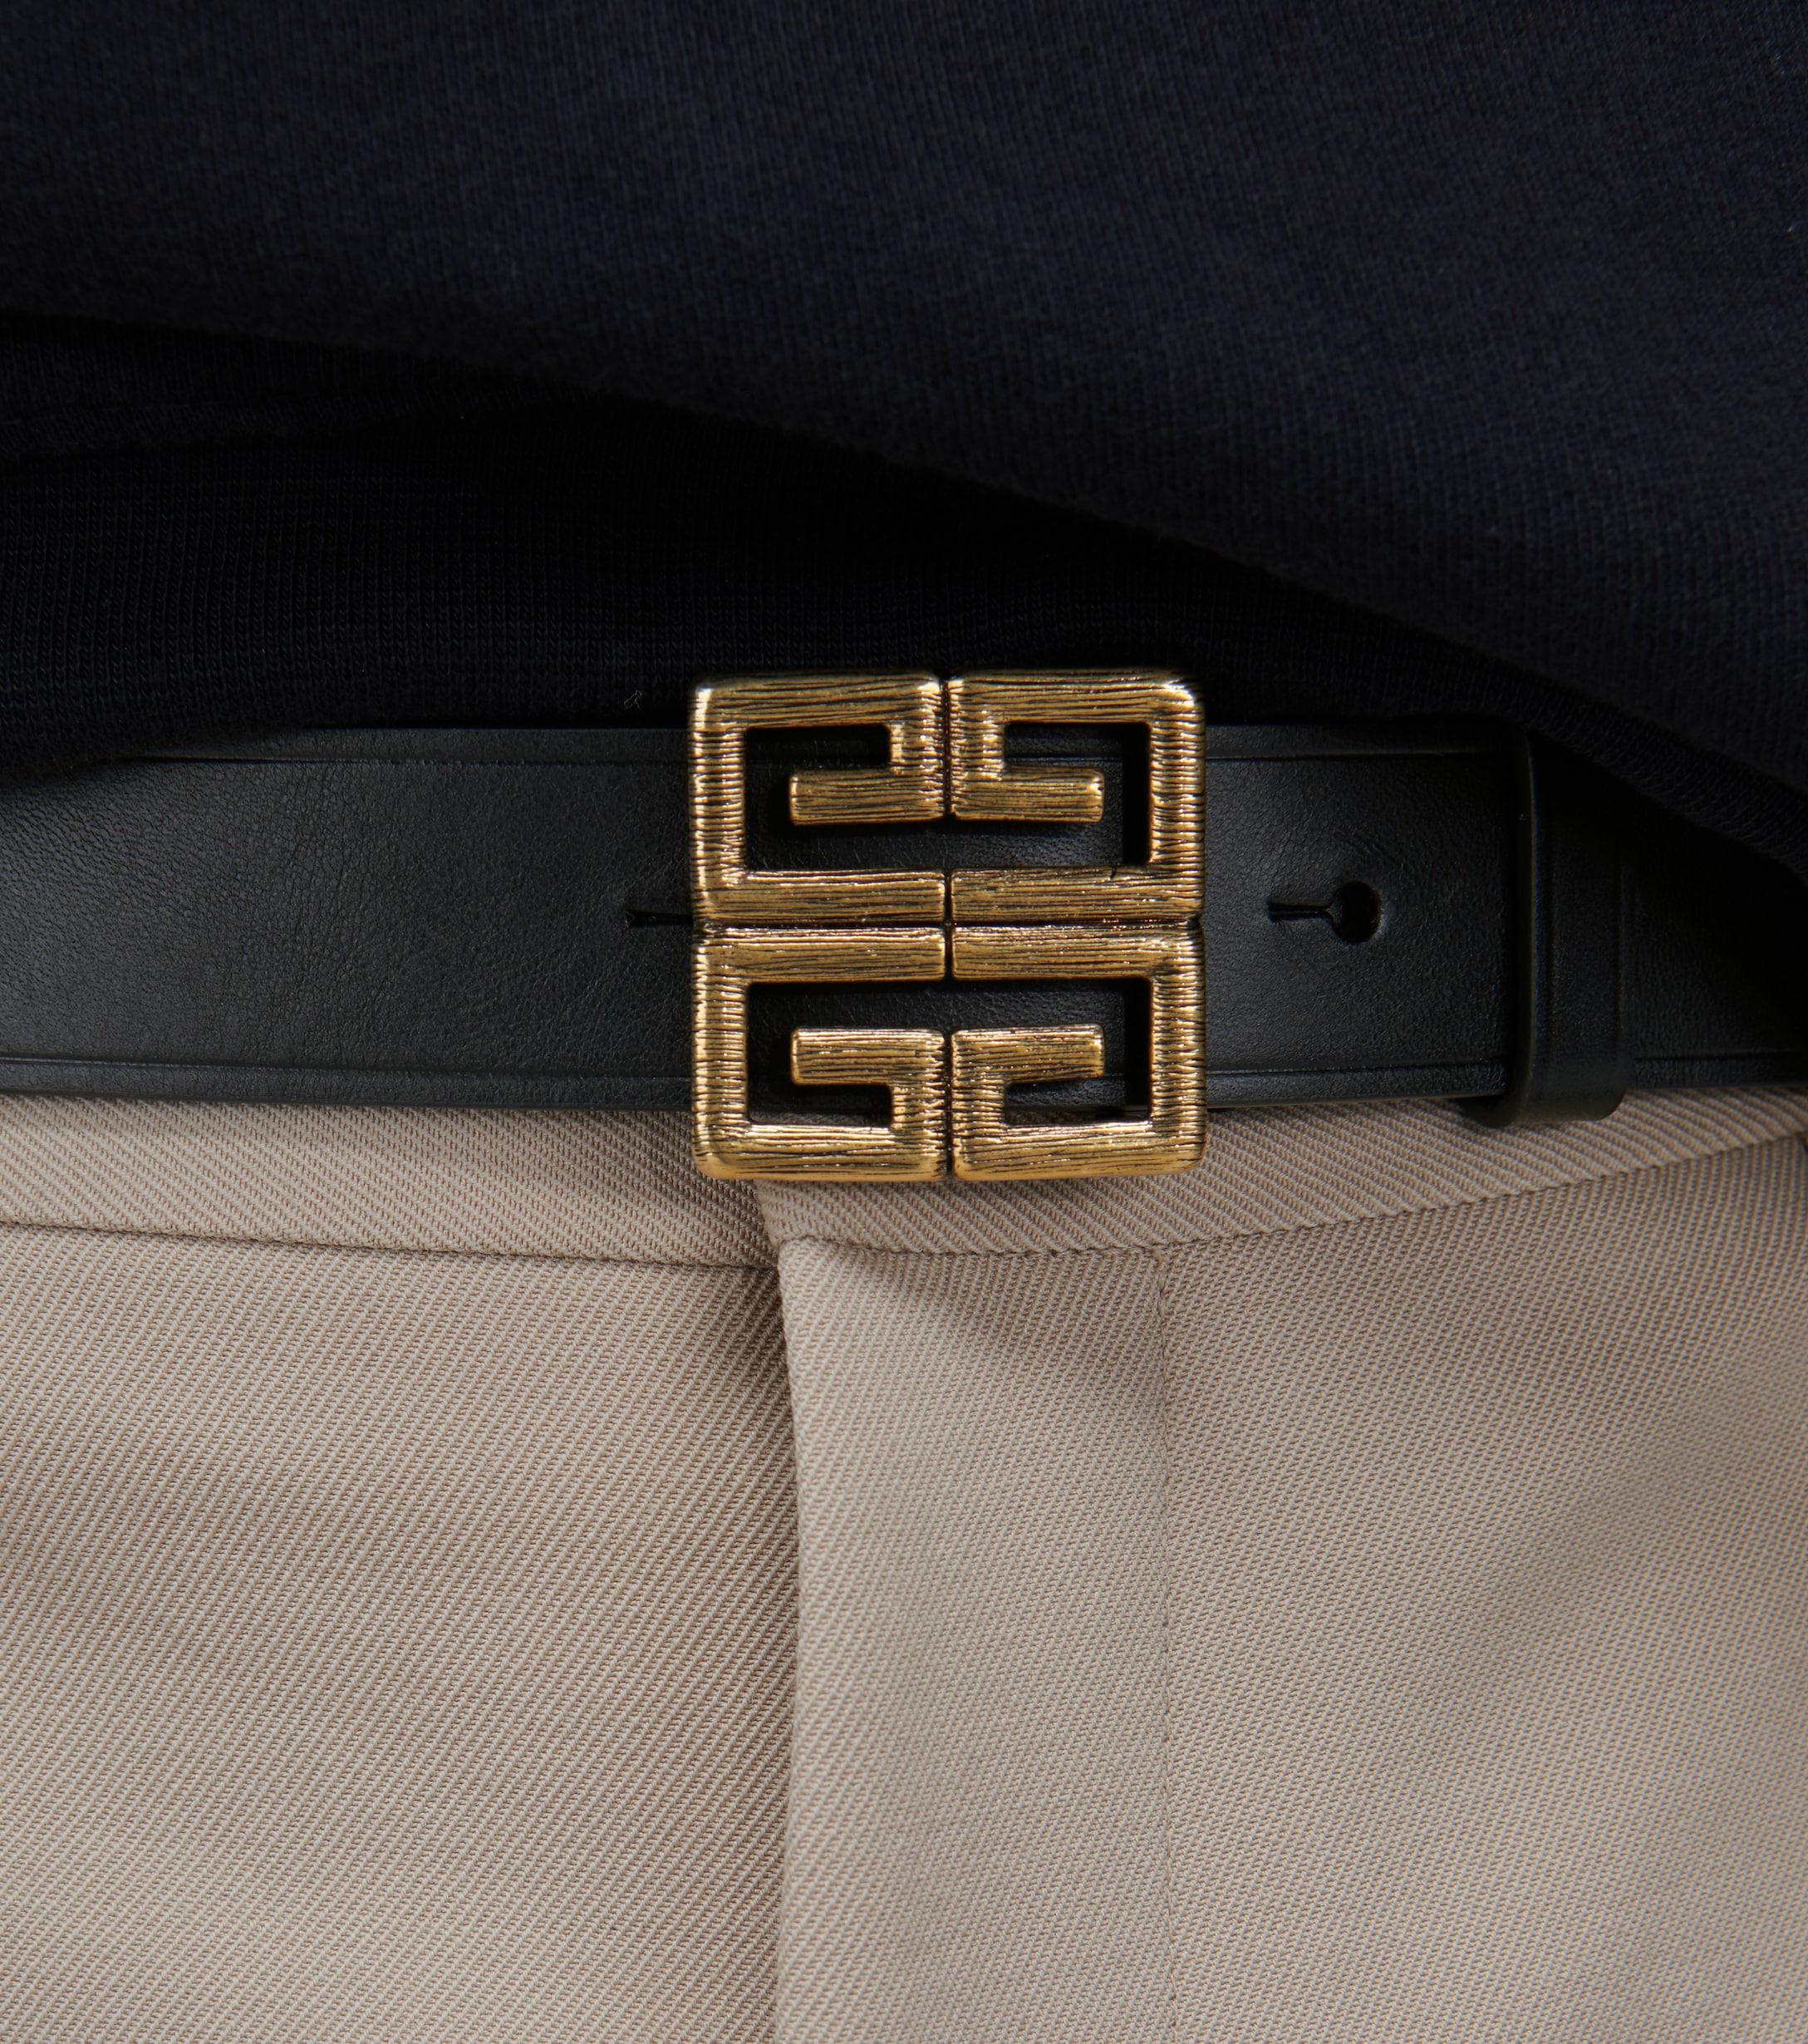 Givenchy Leather 4g Belt in Black for Men - Lyst